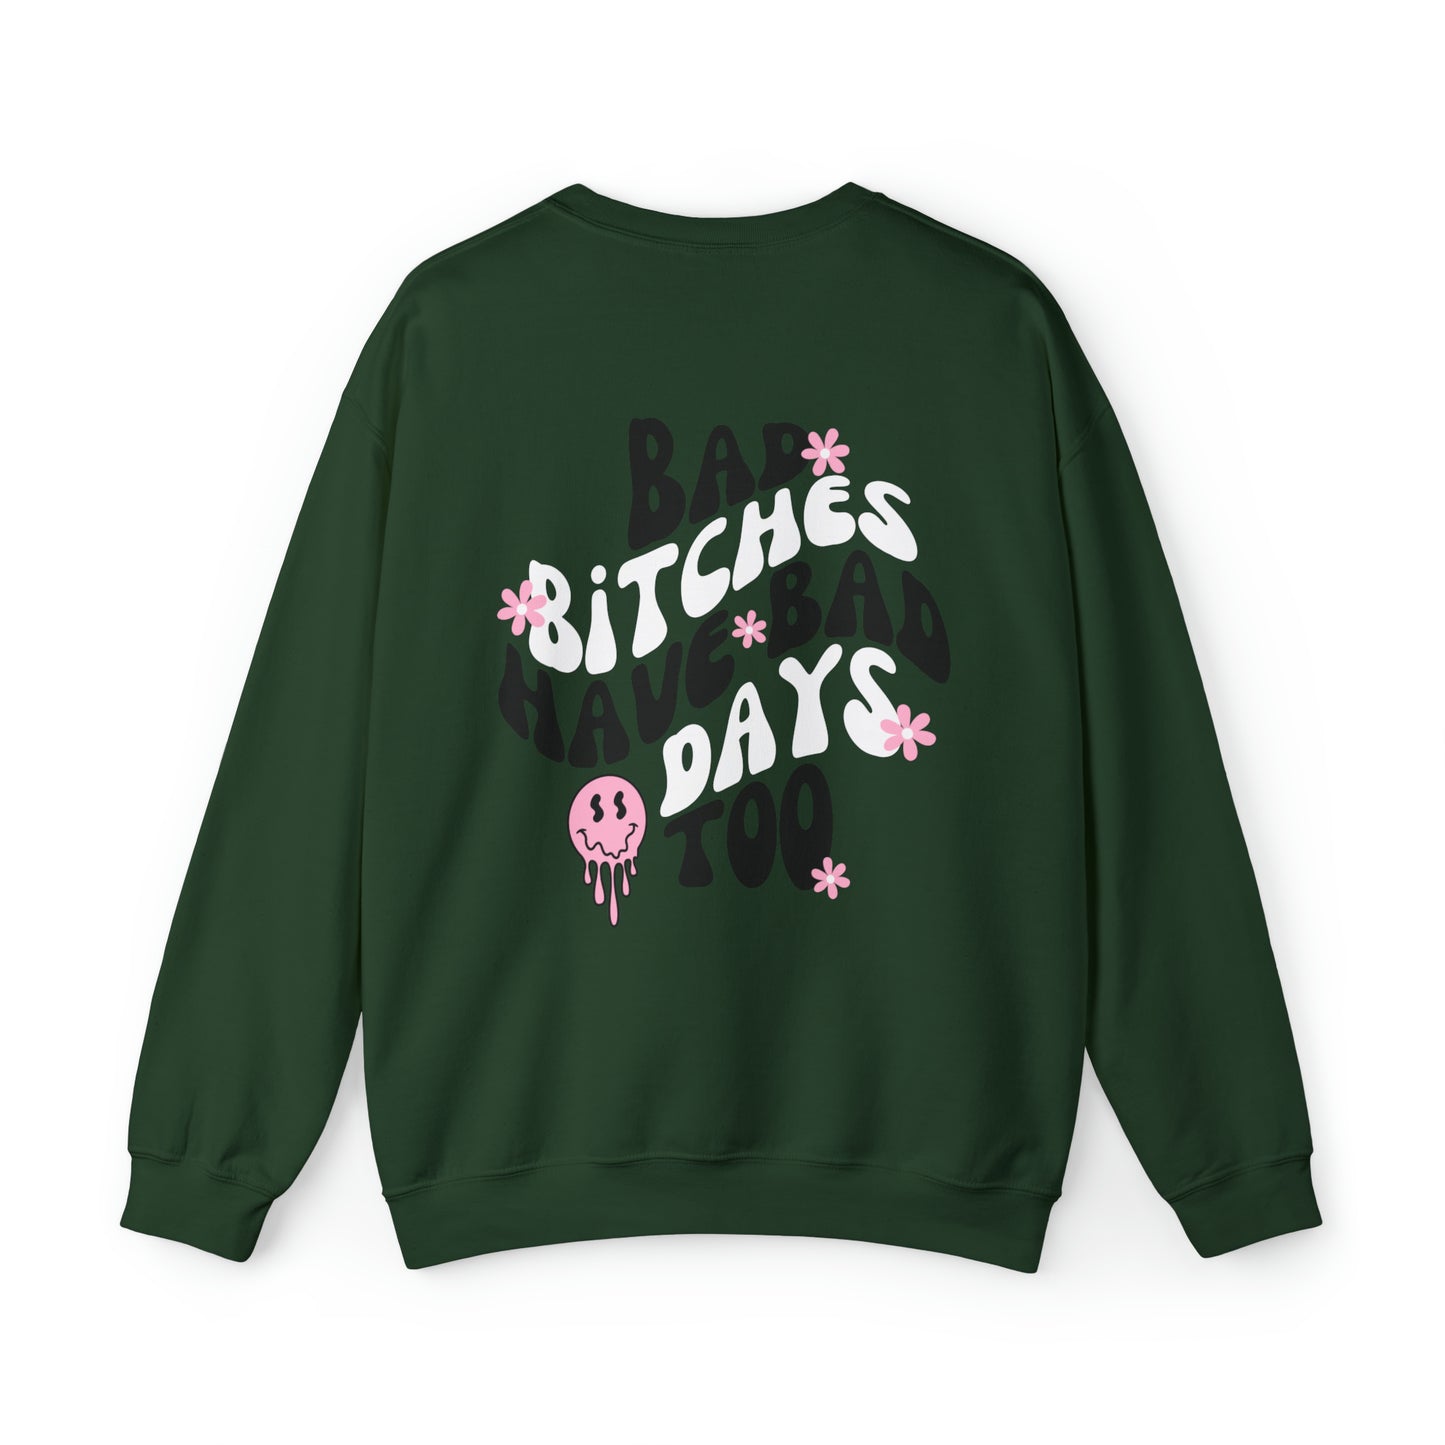 Bad Bitches Have Bad Days Too Crewneck Sweatshirt